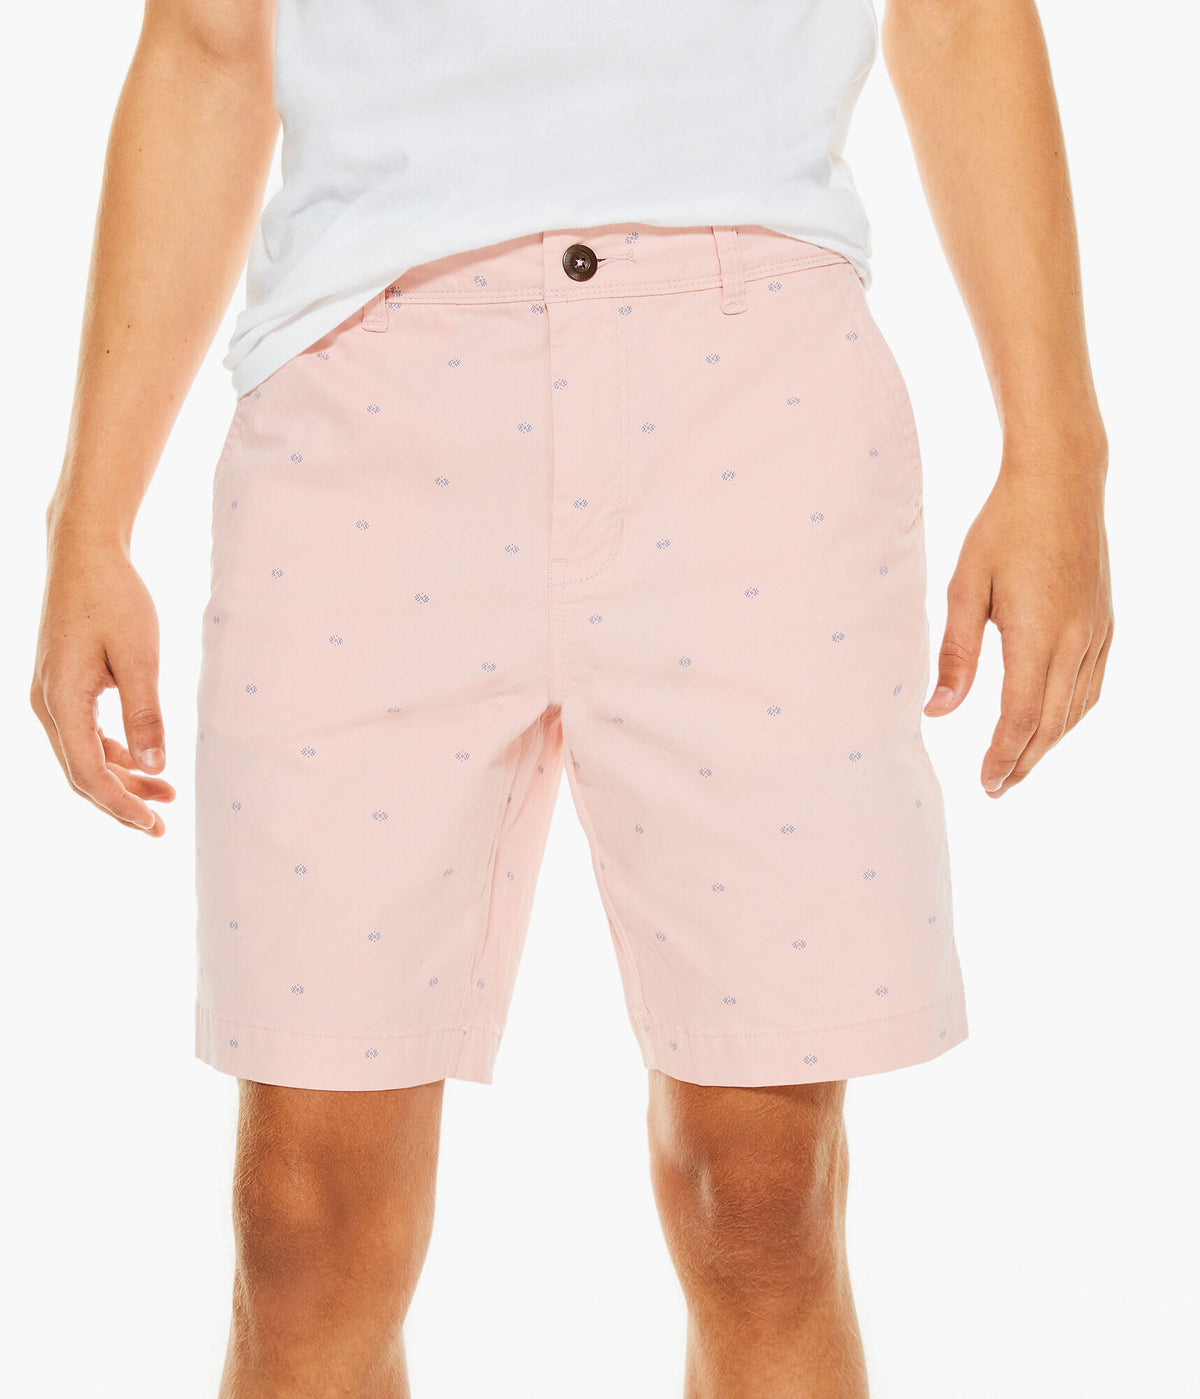 Aeropostale Mens' Geometric Print Classic Chino Shorts 9.5" - Pink - Size 27 - Cotton - Teen Fashion & Clothing Pink Magnolia